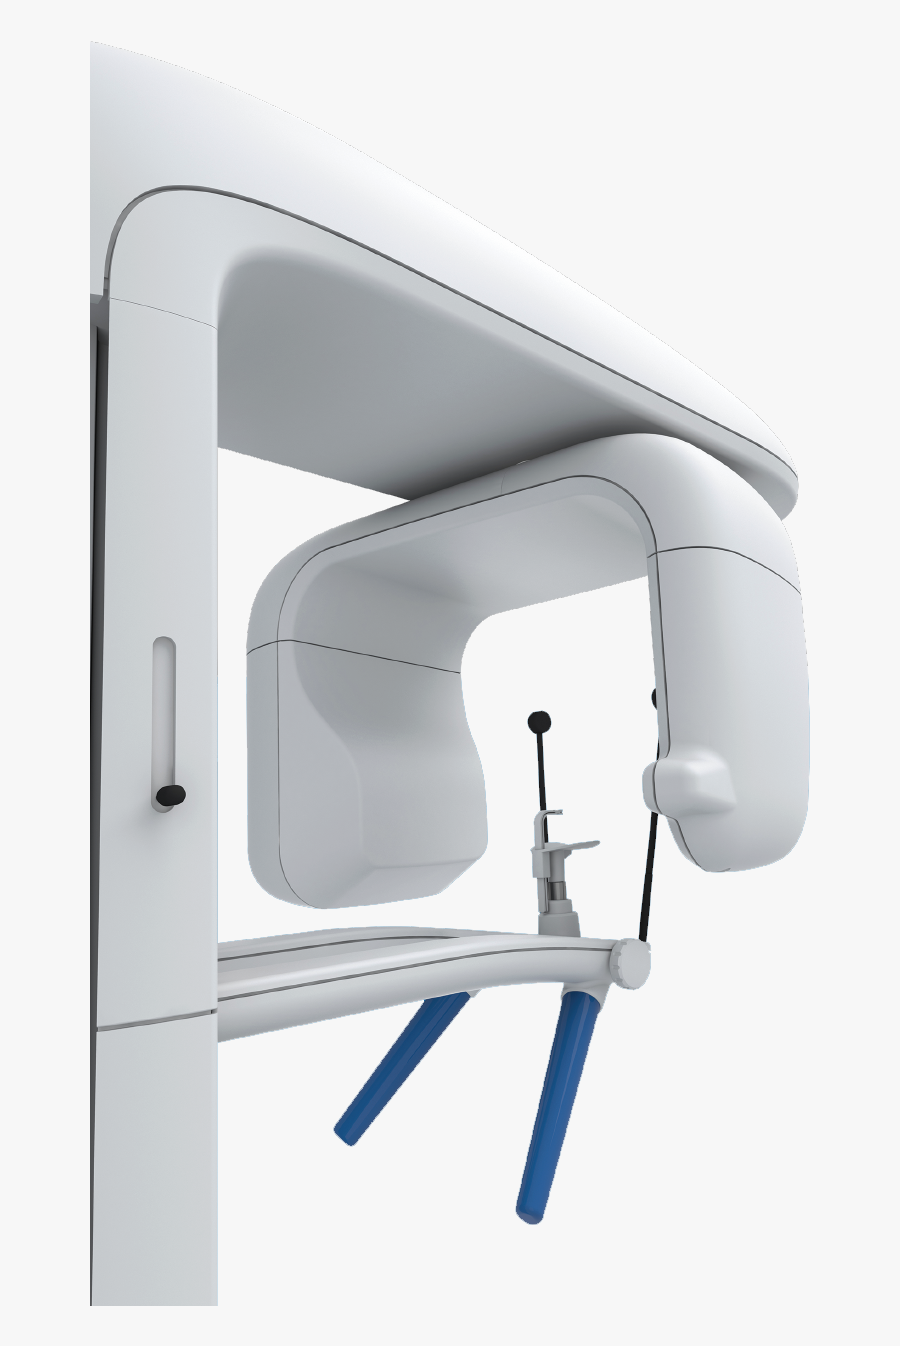 X Ray Dental Equipment, Transparent Clipart